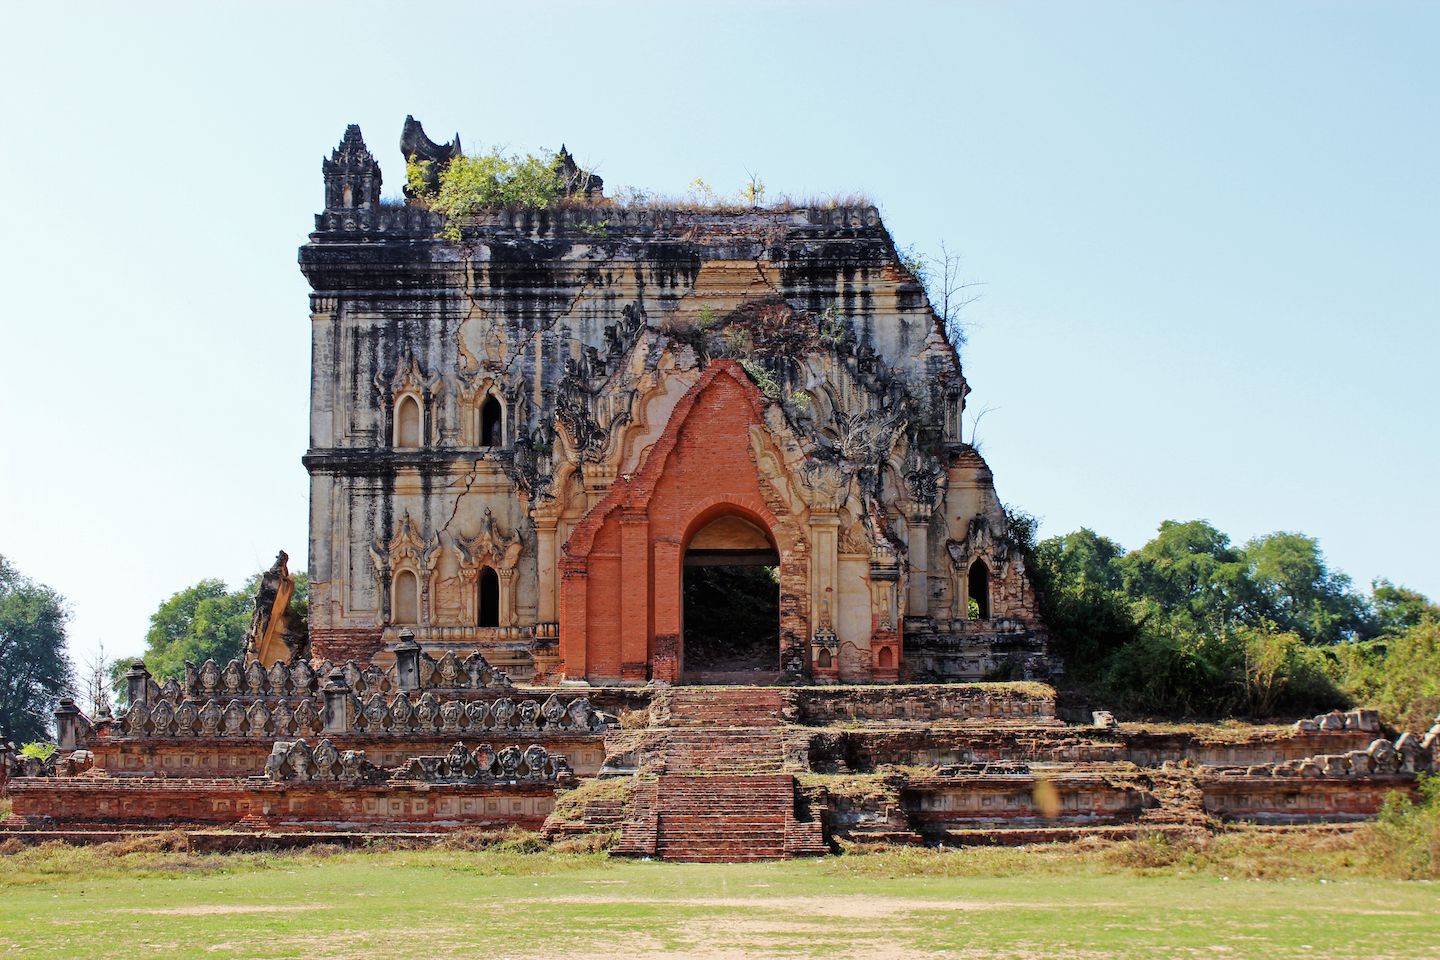 Temple ruins in Inwa, Myanmar